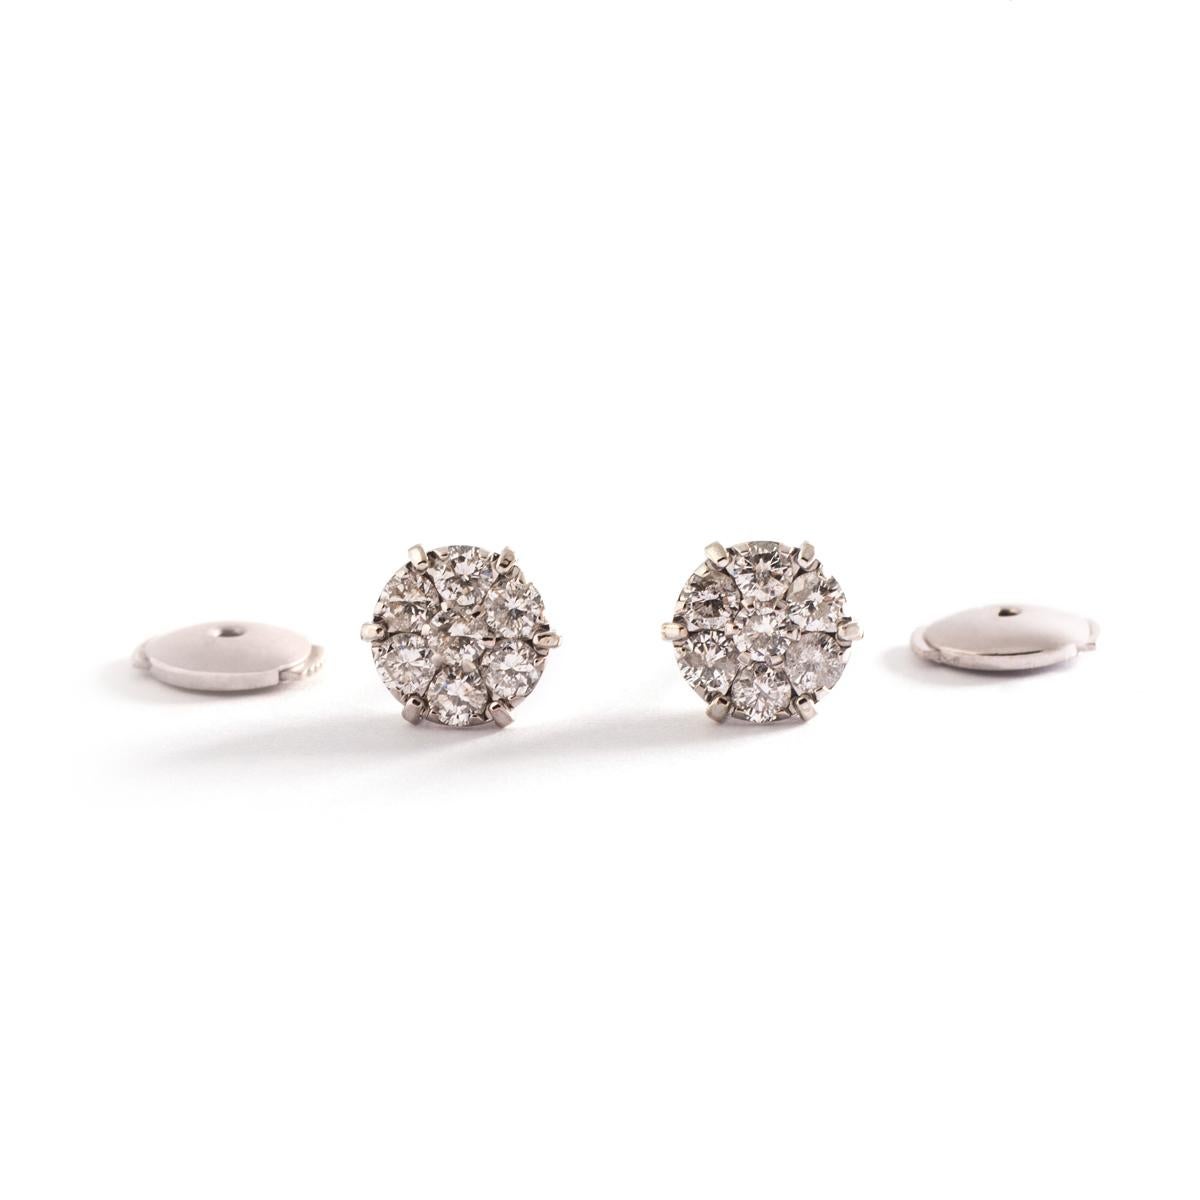 Ear Studs Earrings Diamond on White Gold.
14 round cut Diamonds.
Diameter: 0.65 centimeter.
Gross weight: 2.16 grams.